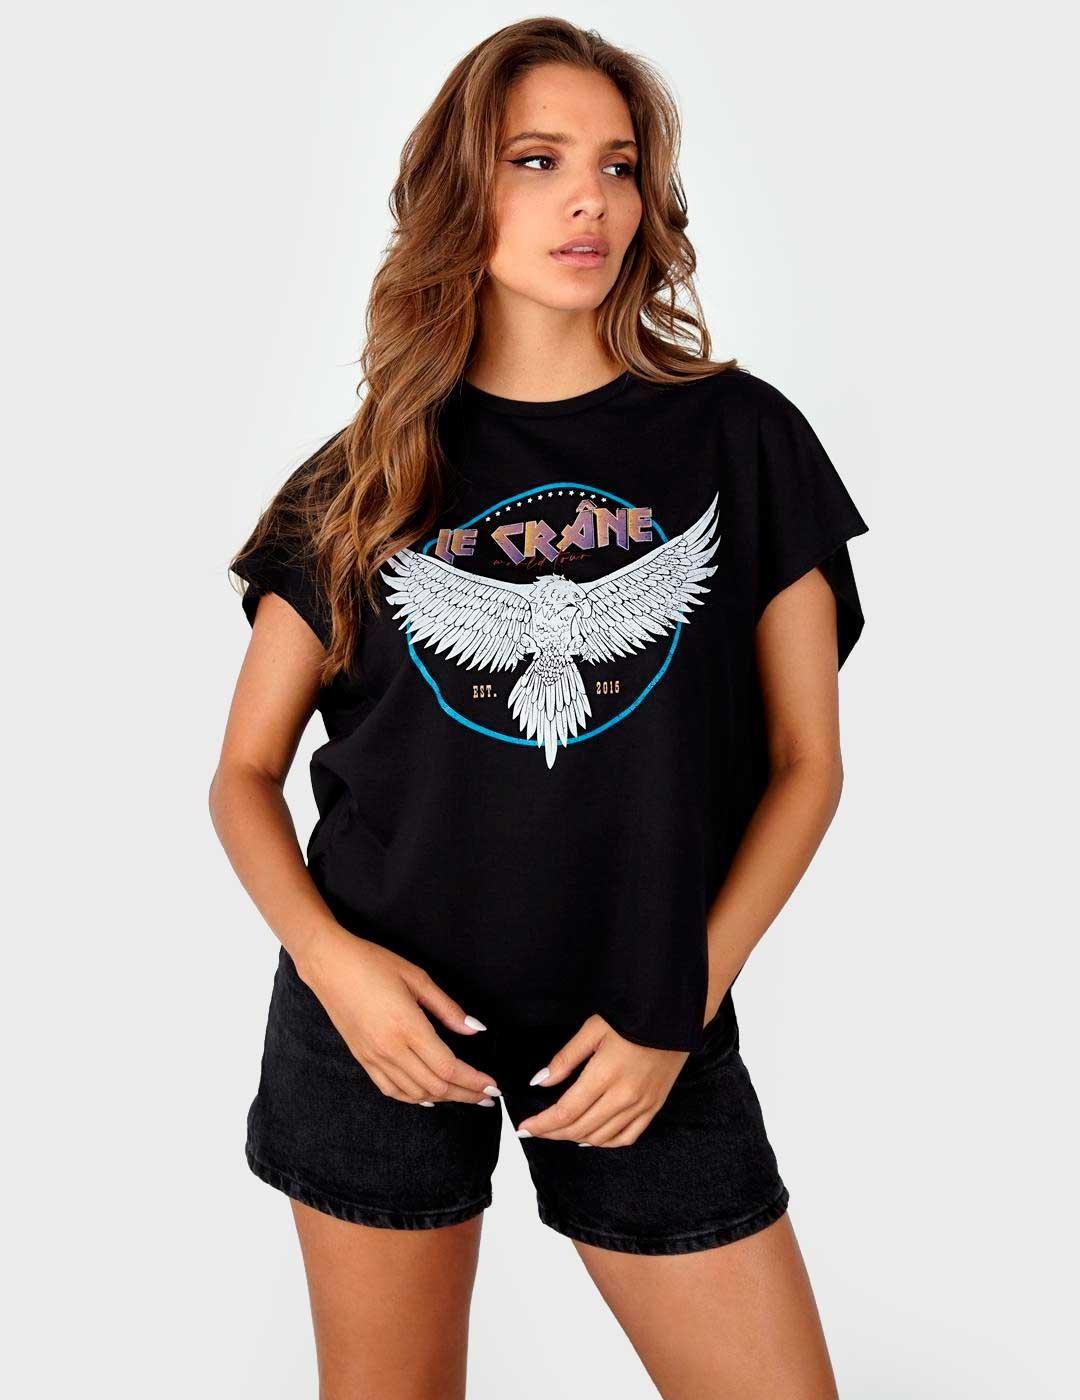 Camiseta Le Crane Jim Free Eagle negra para mujer